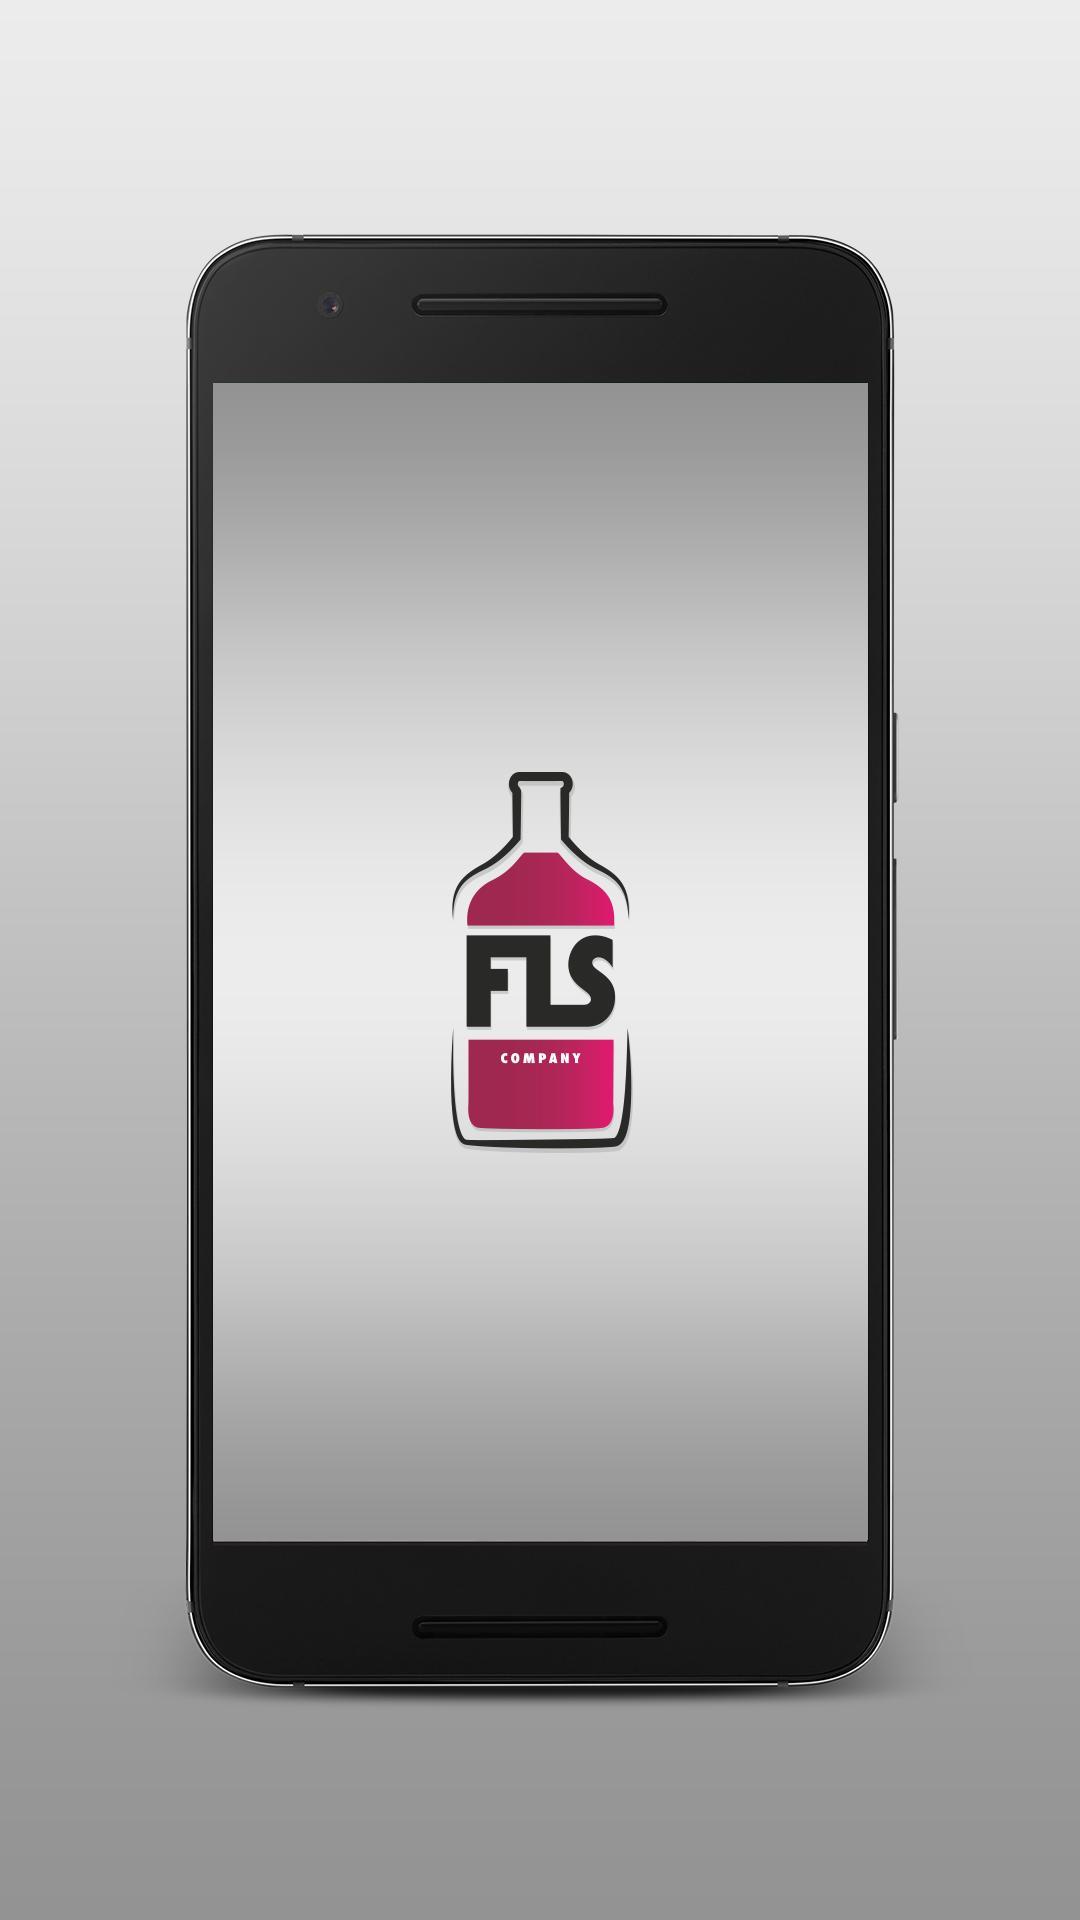 FLS mobile. DL co. Apk company